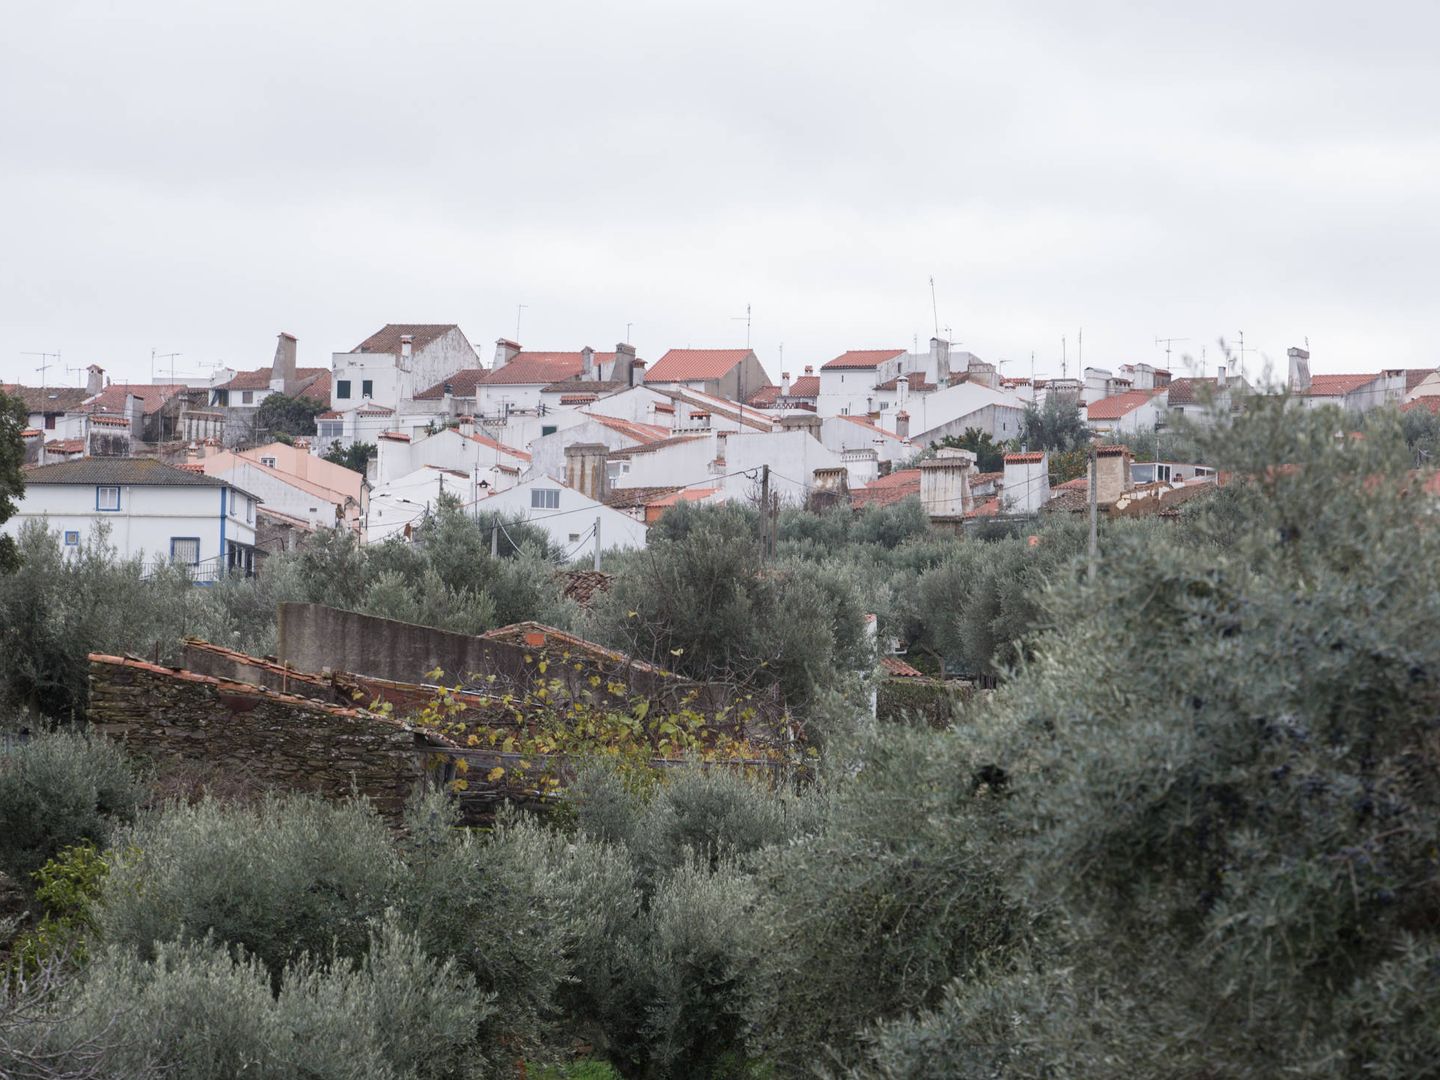 Vista de Montalvao, en Portugal, a escasos kilómetros de la frontera española. (D. B.)